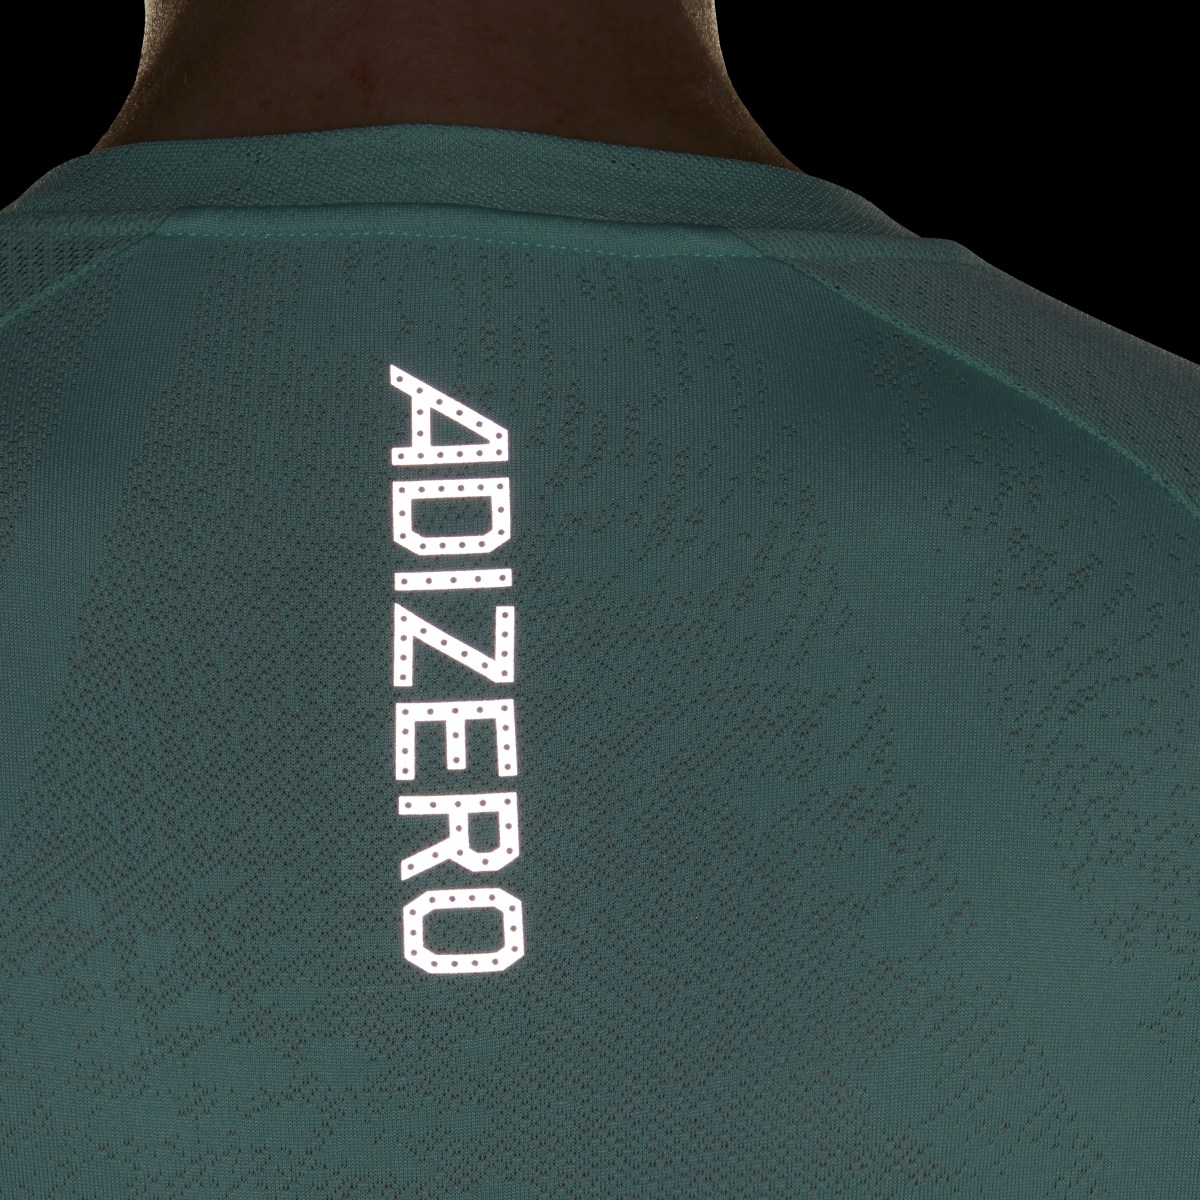 Adidas Adizero Running Long-Sleeve Top. 7